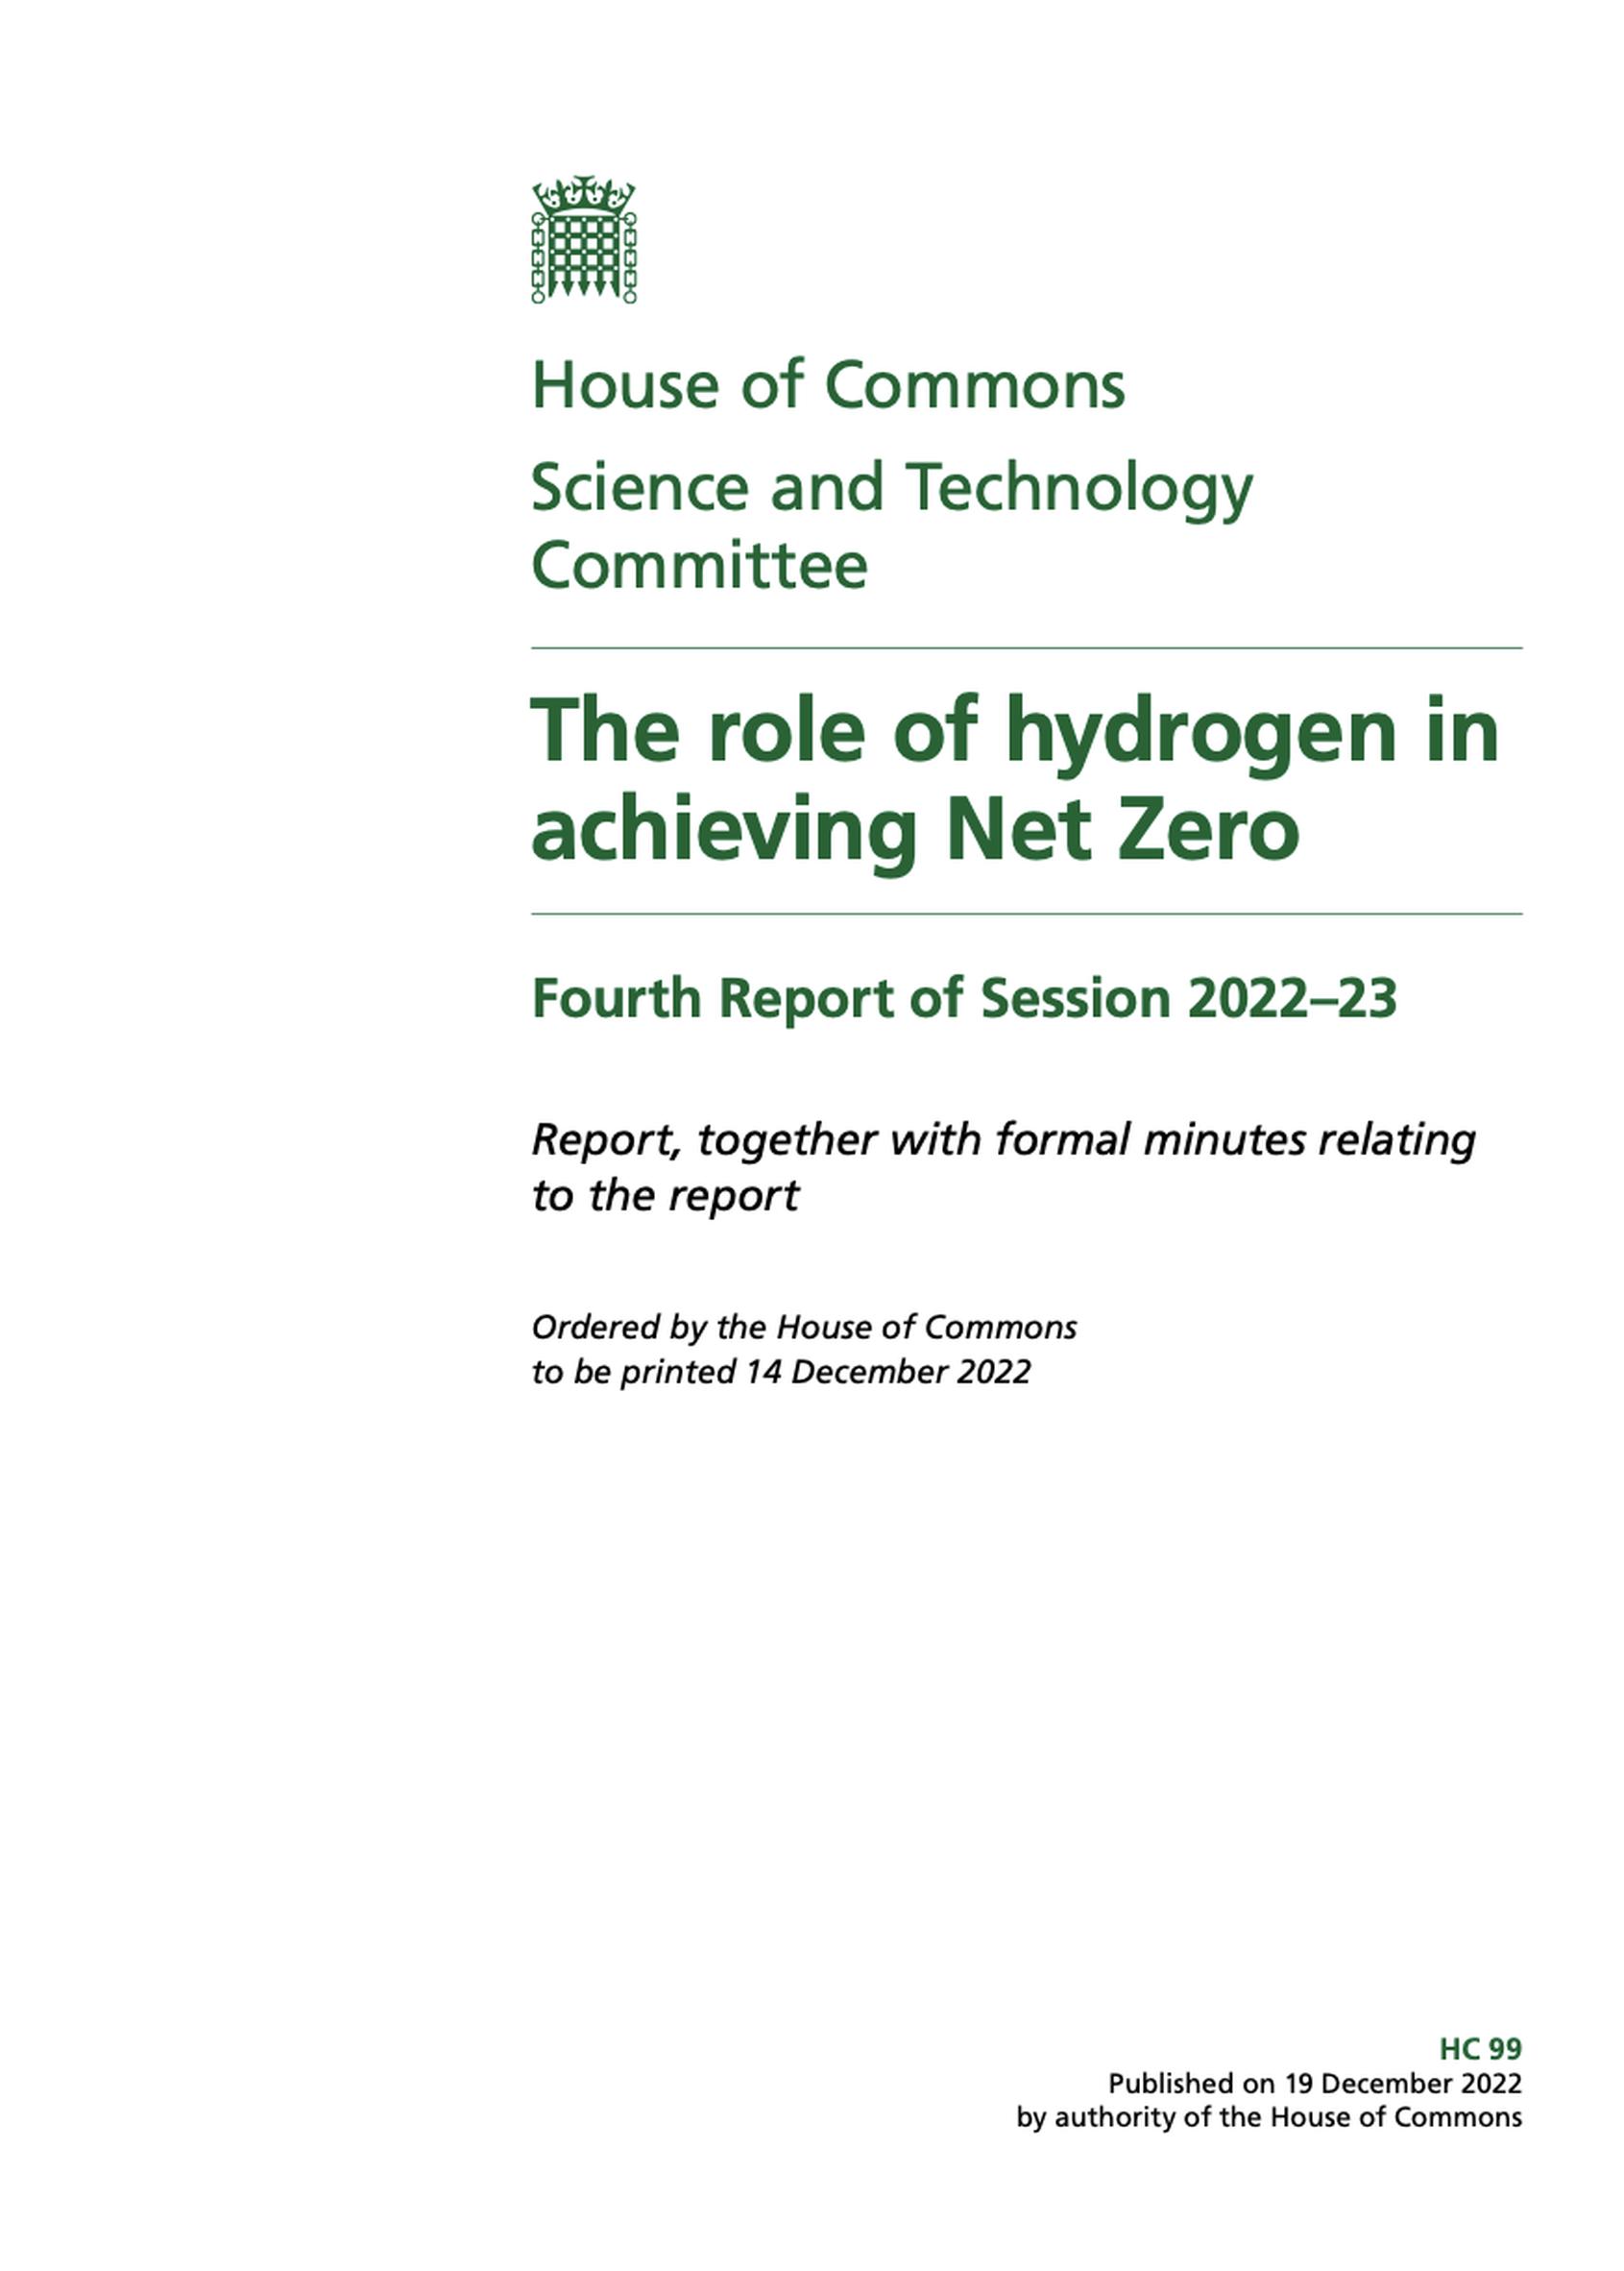 Hydrogen is not a panacea for achieving net zero, warn MPs